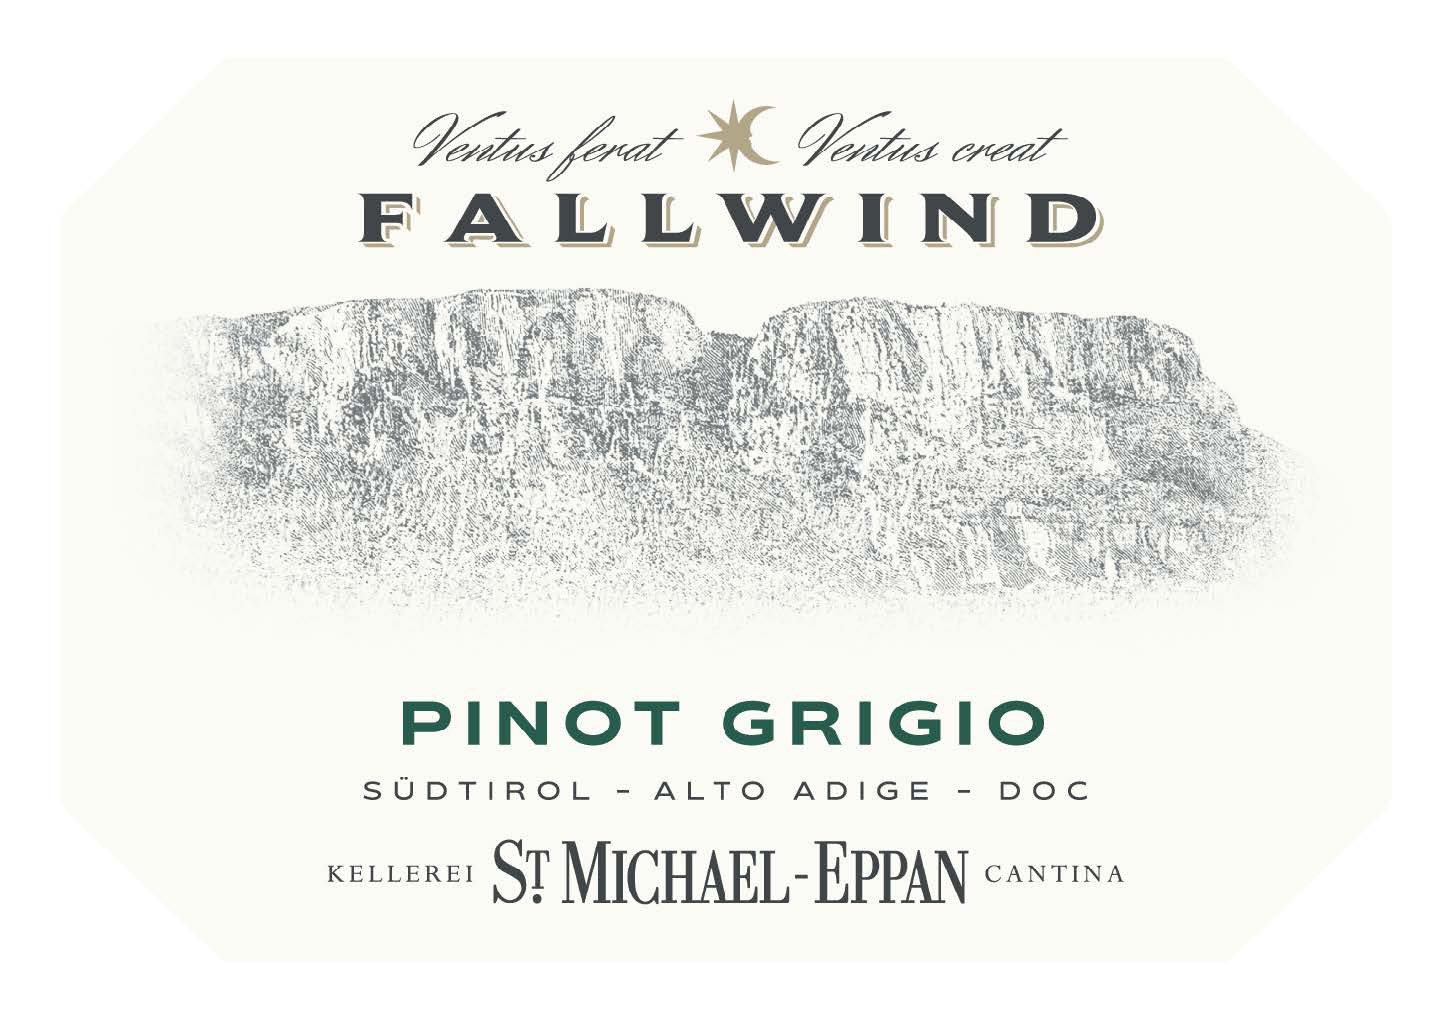 St. Michael-Eppan - Pinot Grigio - Fallwind label